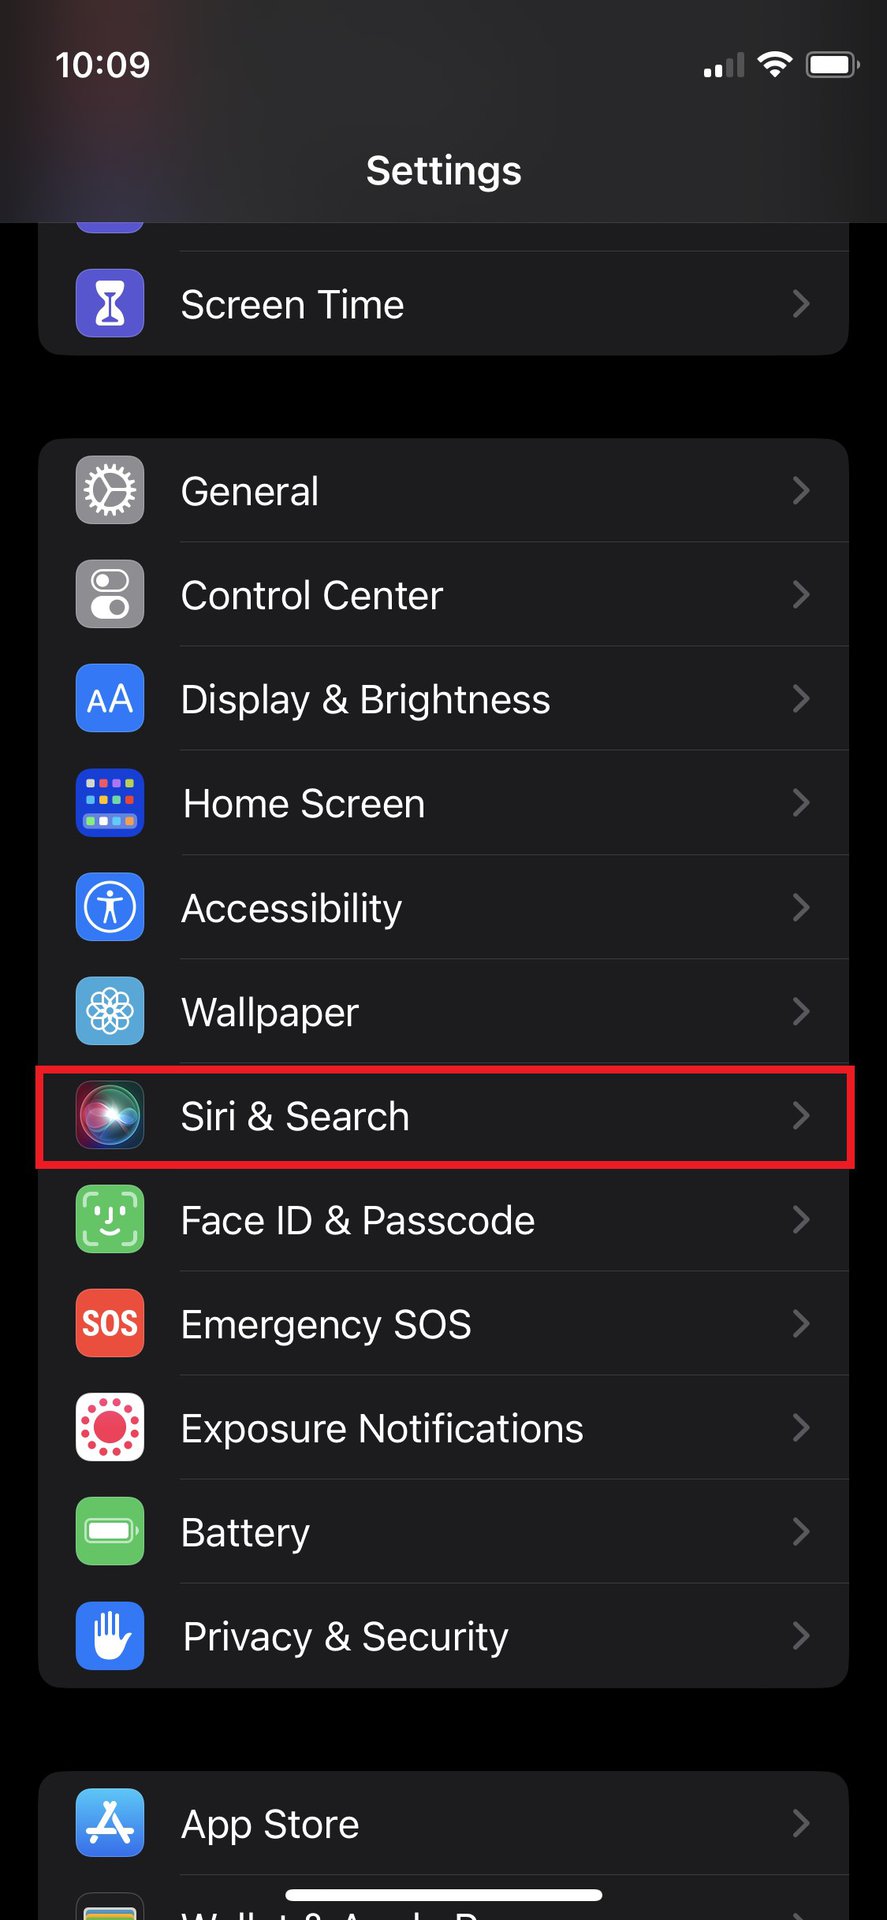 Siri and search settings menu